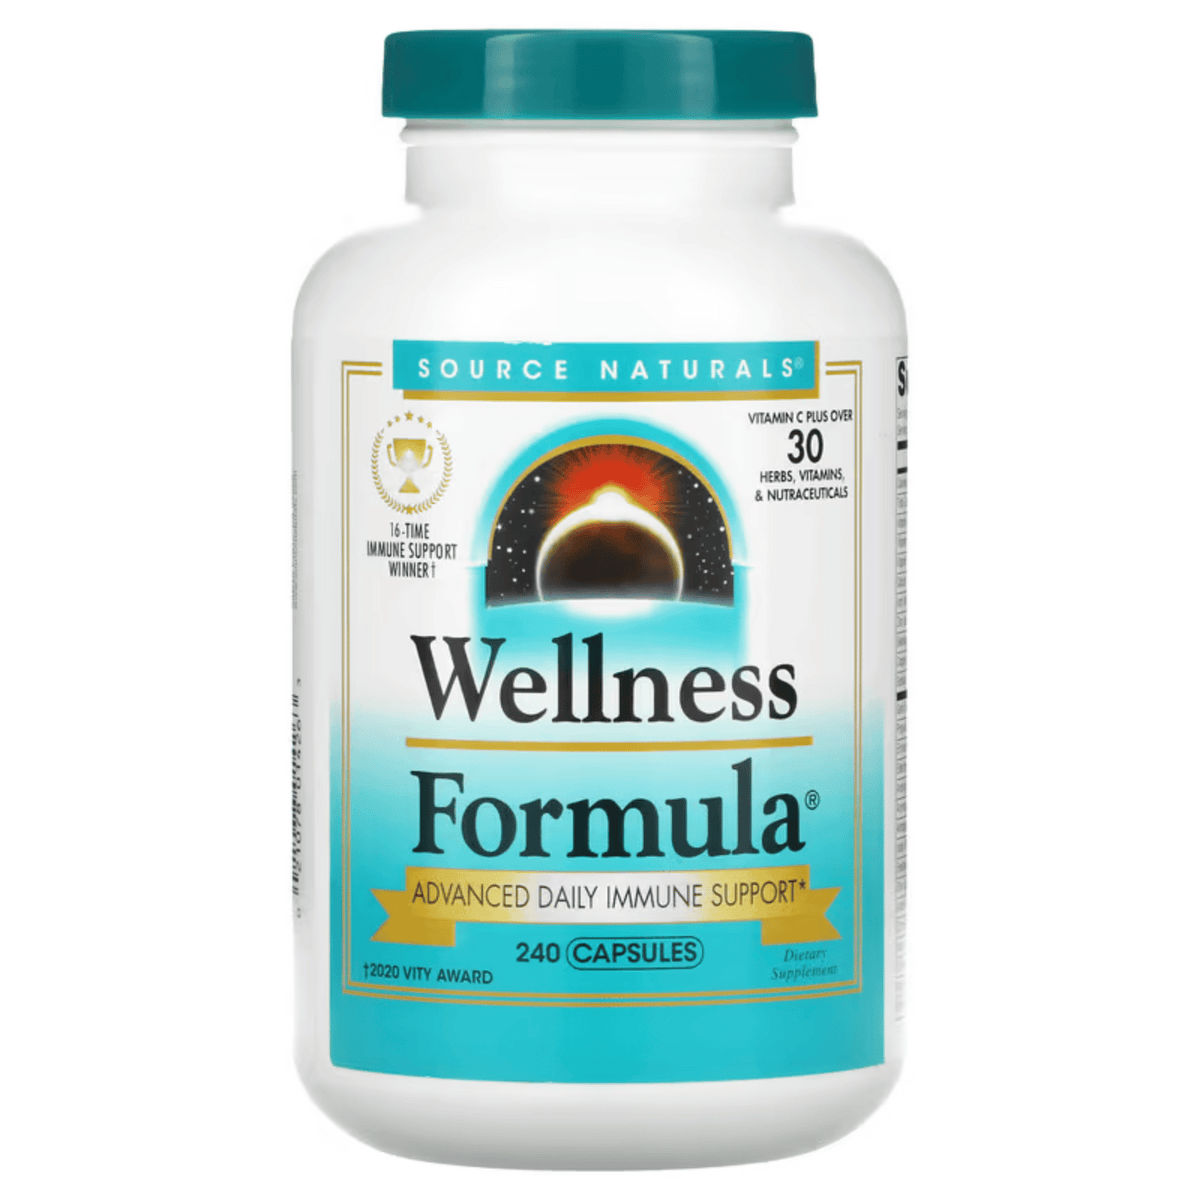 Primary Image of Wellness Formua Capsules